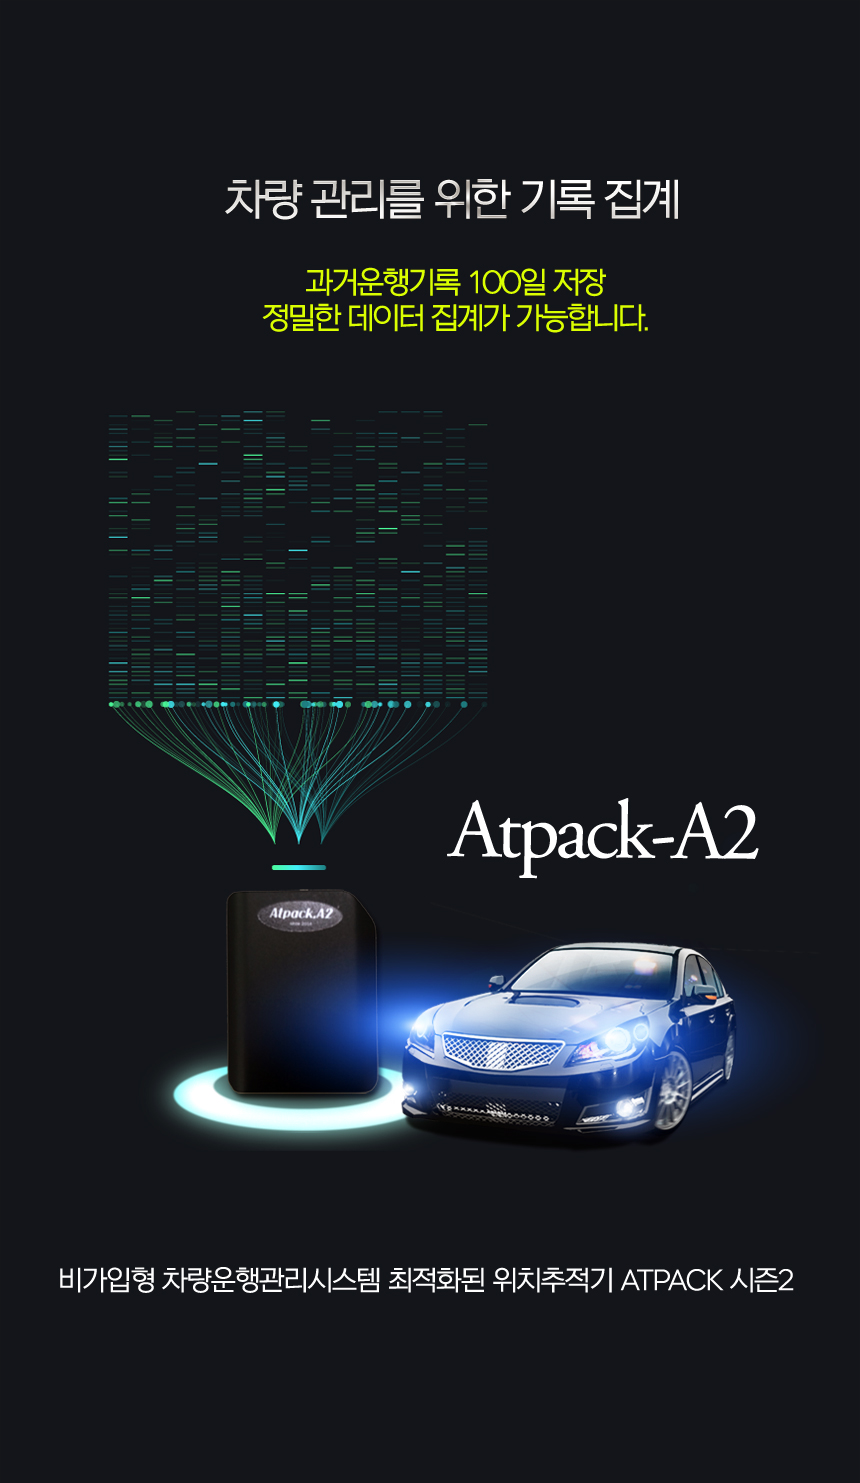 12_AT-PCAK_A2.jpg